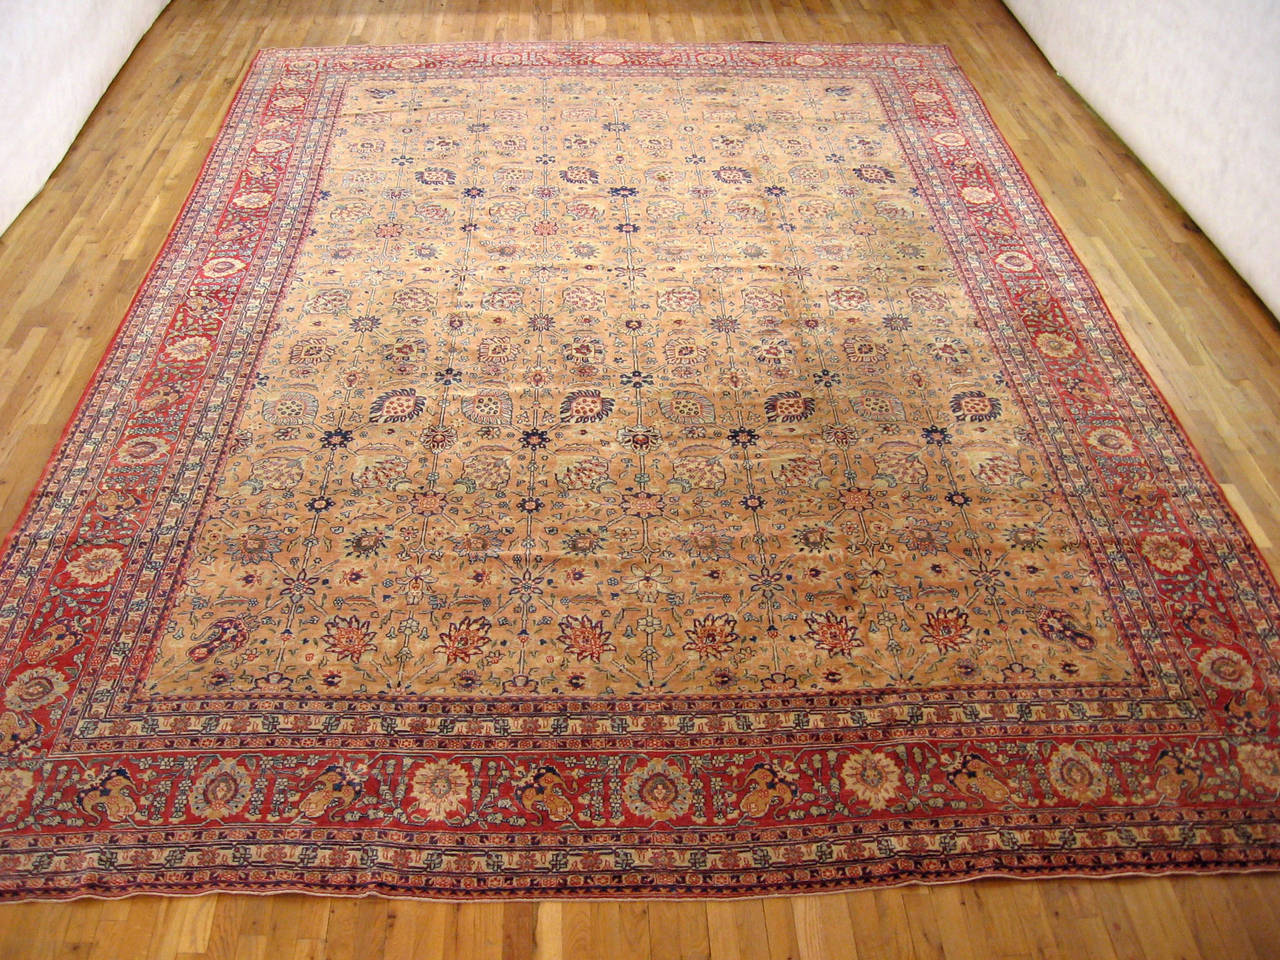 An elegant antique Persian Tabriz carpet, circa 1900, size 16'7